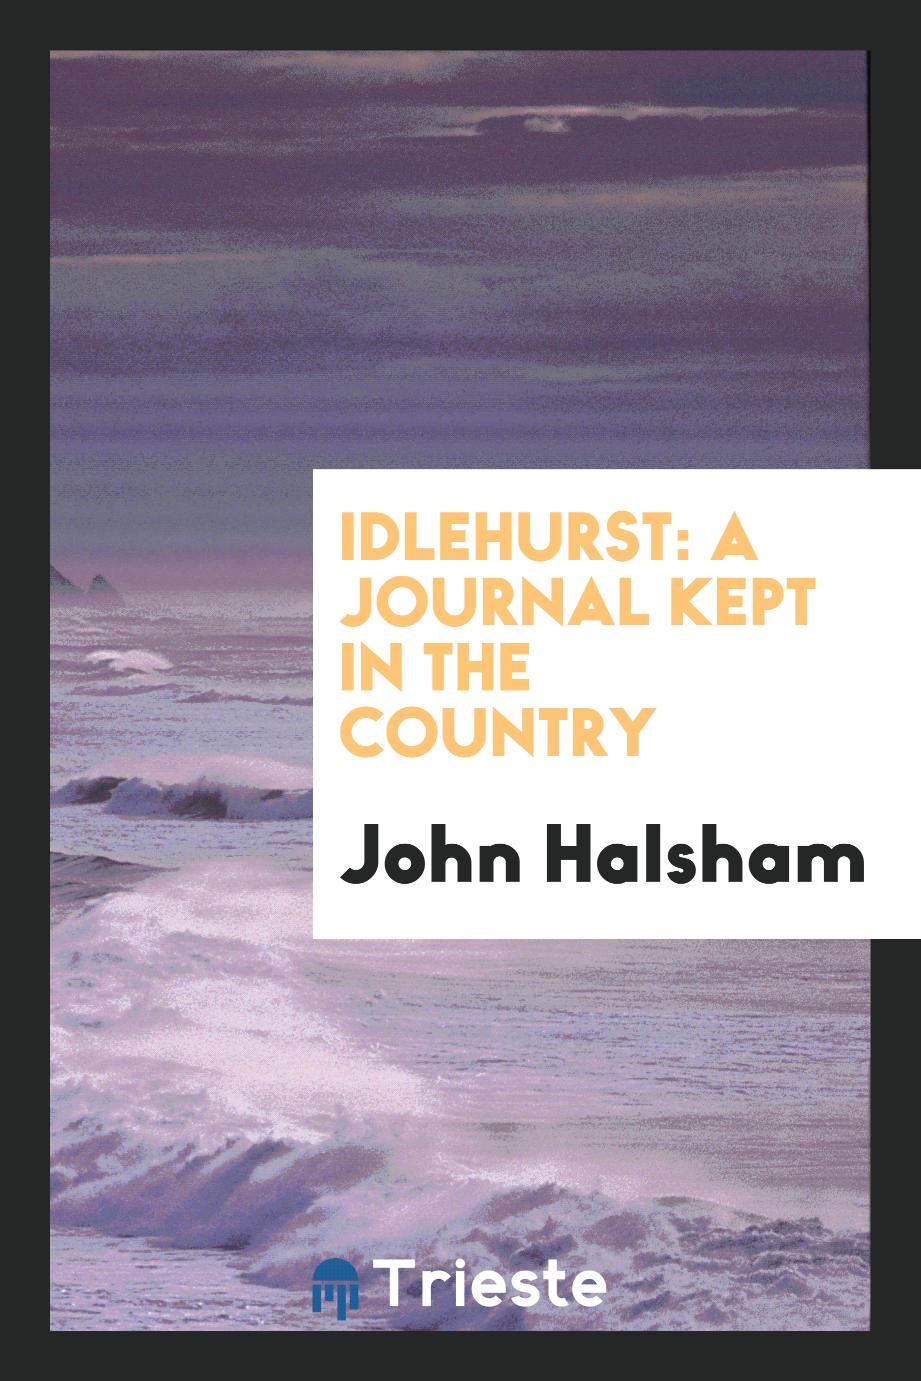 Idlehurst: A Journal Kept in the Country